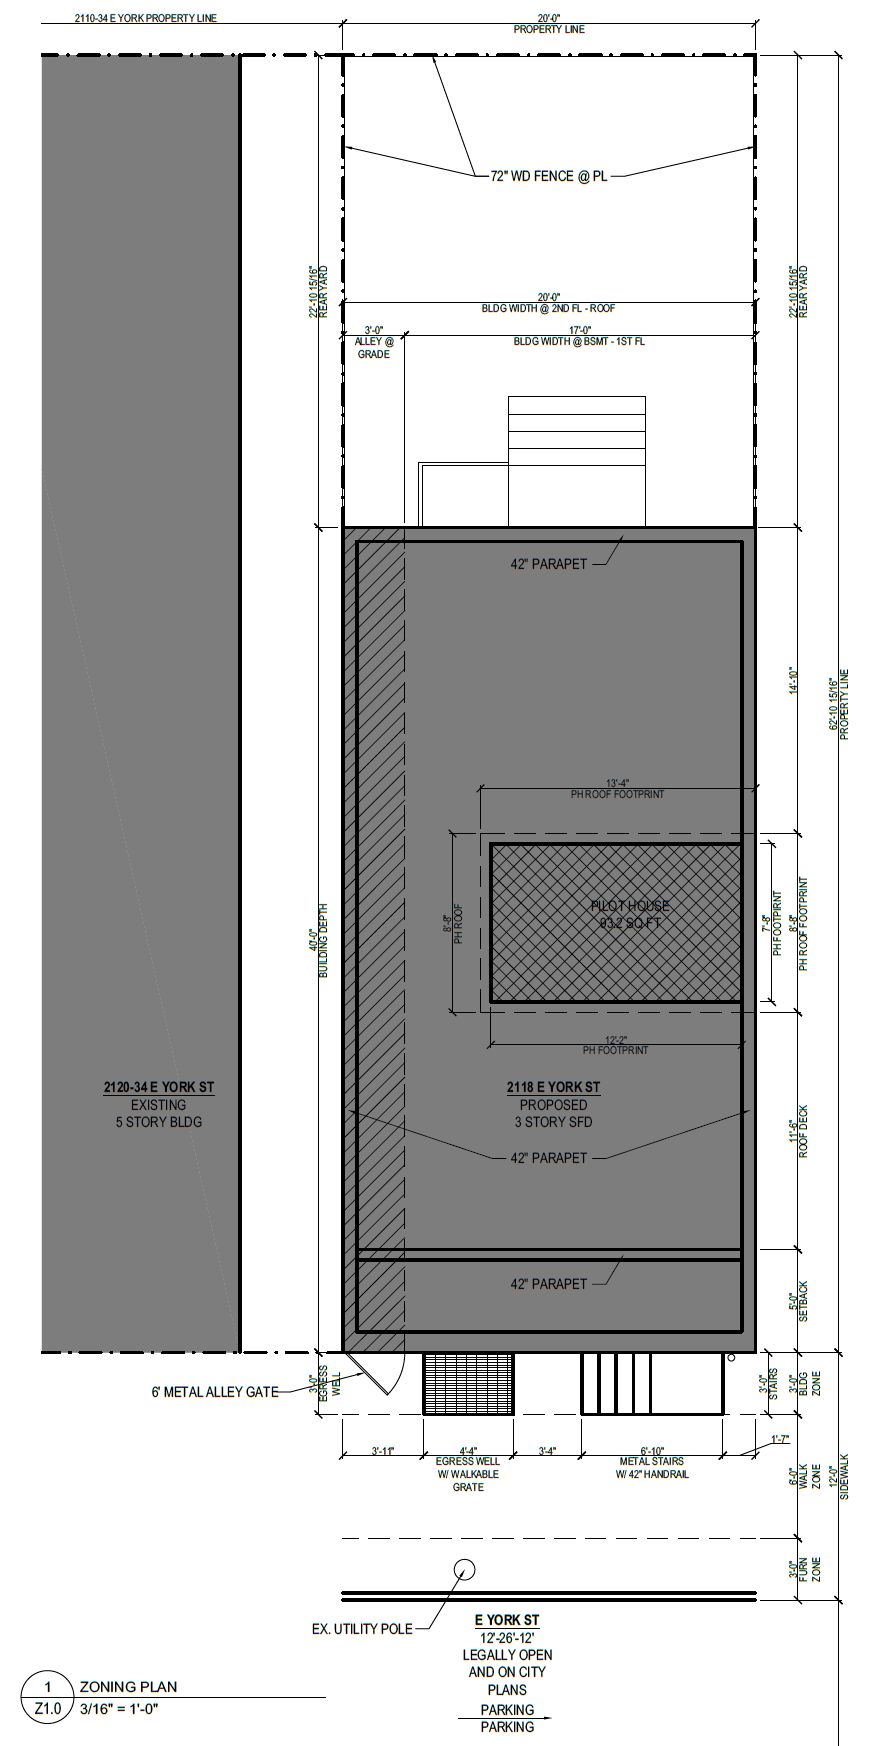 2118 East York Street. Site plan. Credit: Leake Engineering via the City of Philadelphia